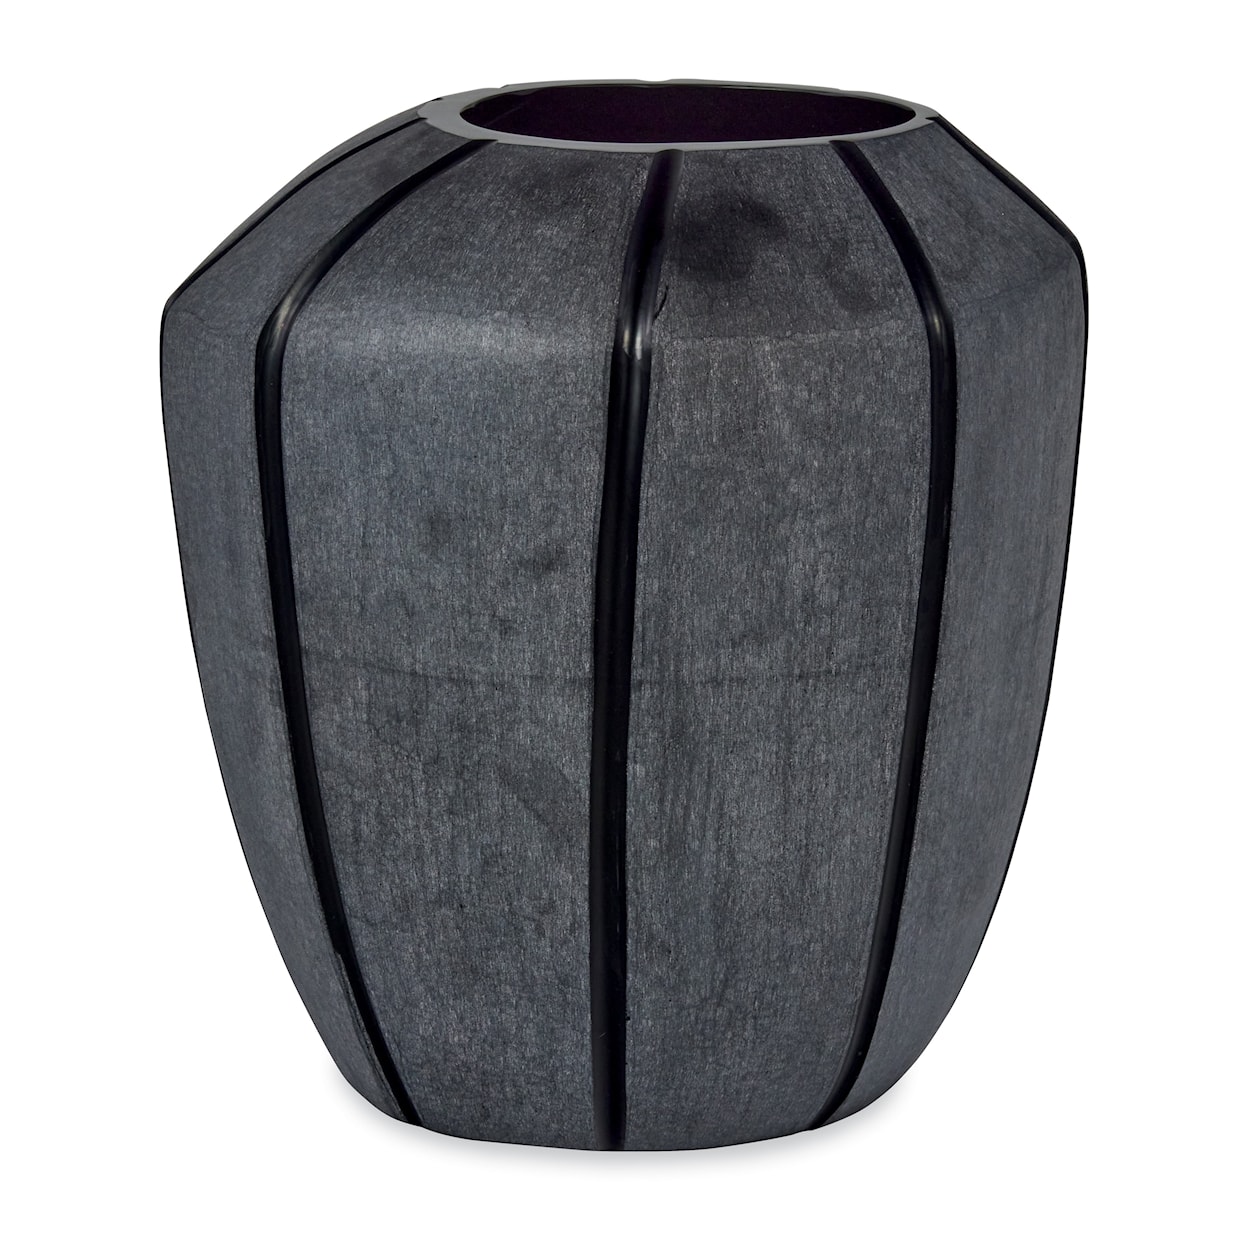 BOBO Intriguing Objects BOBO Intriguing Objects Simius Soft Black Glass Blown Vase